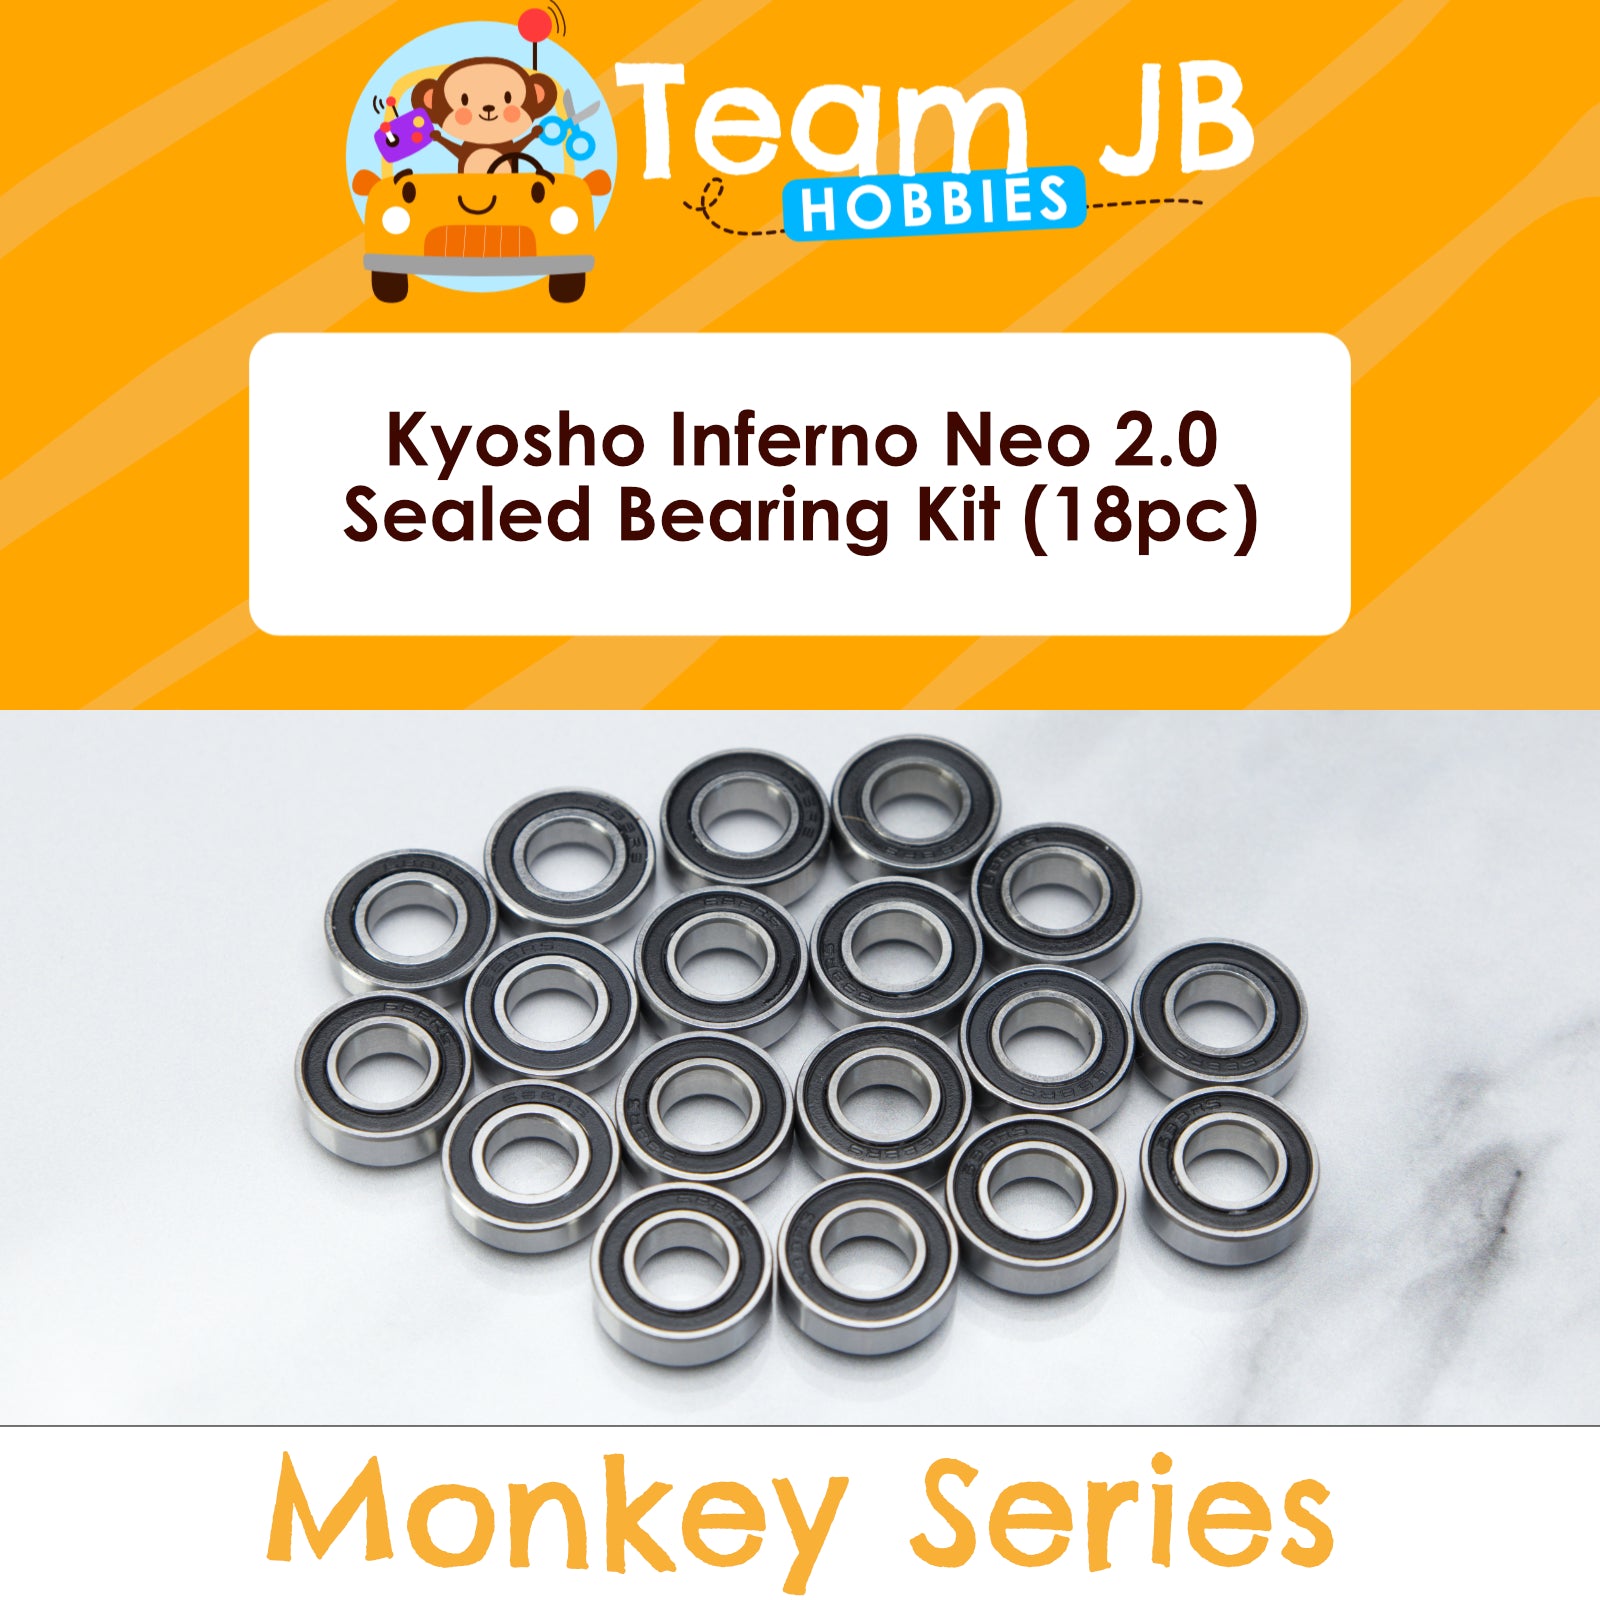 Kyosho Inferno Neo 2.0 - Sealed Bearing Kit